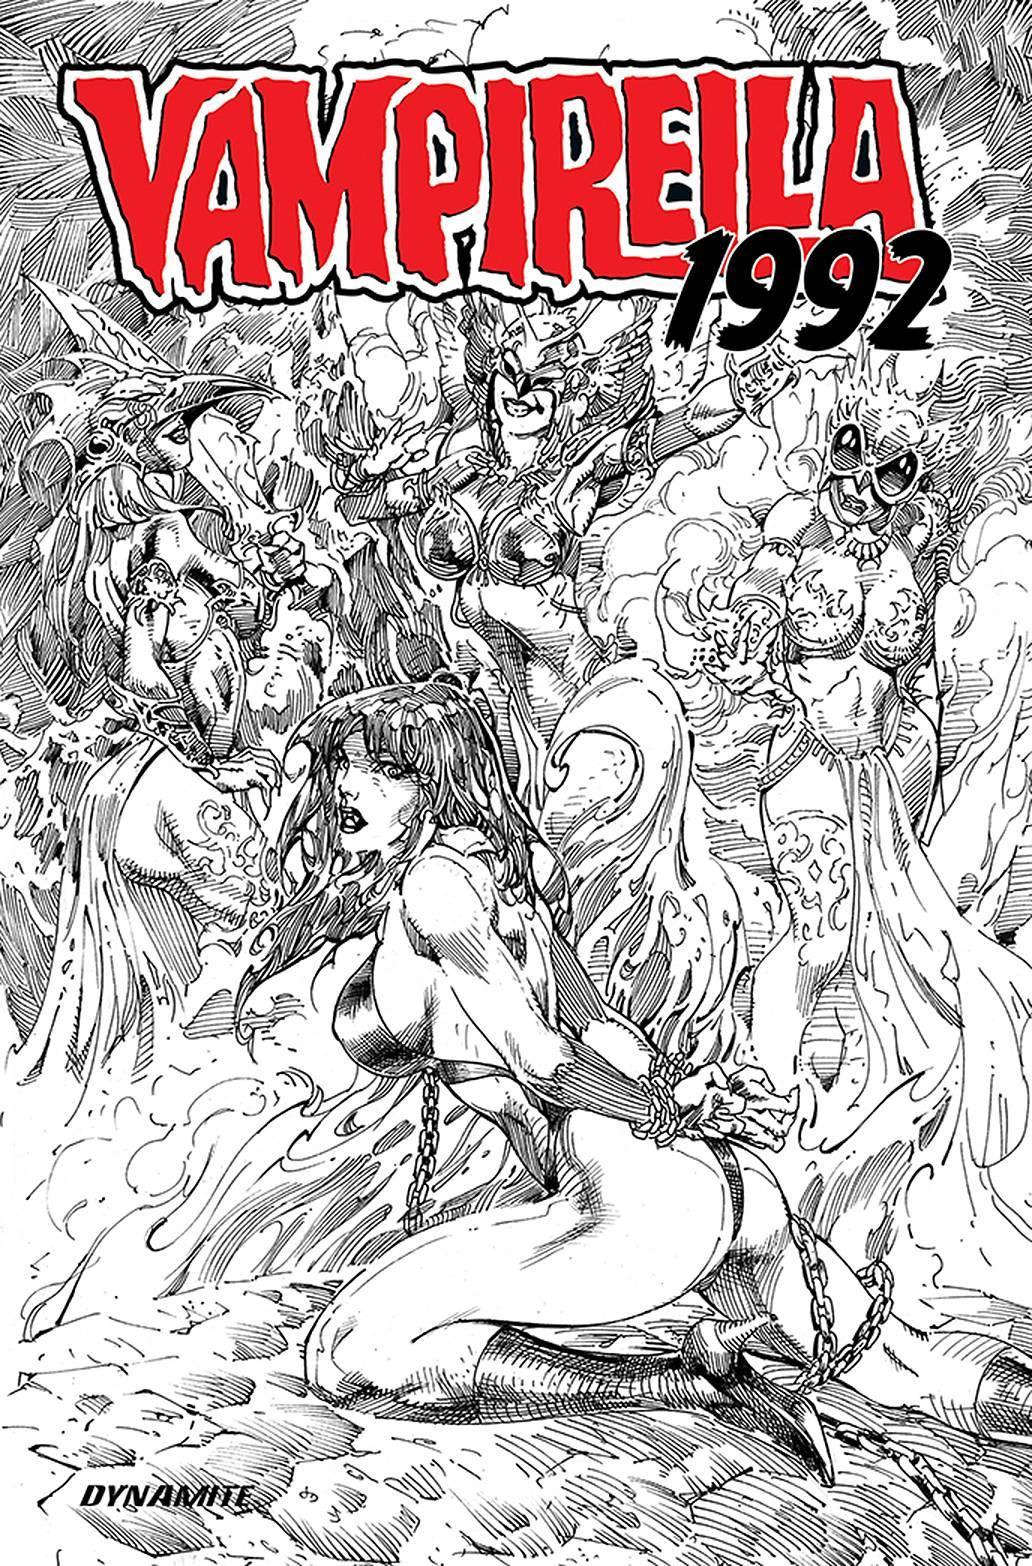 VAMPIRELLA 1992 #1 ONE SHOT 10 COPY CASTRO LINE ART INCV - Kings Comics